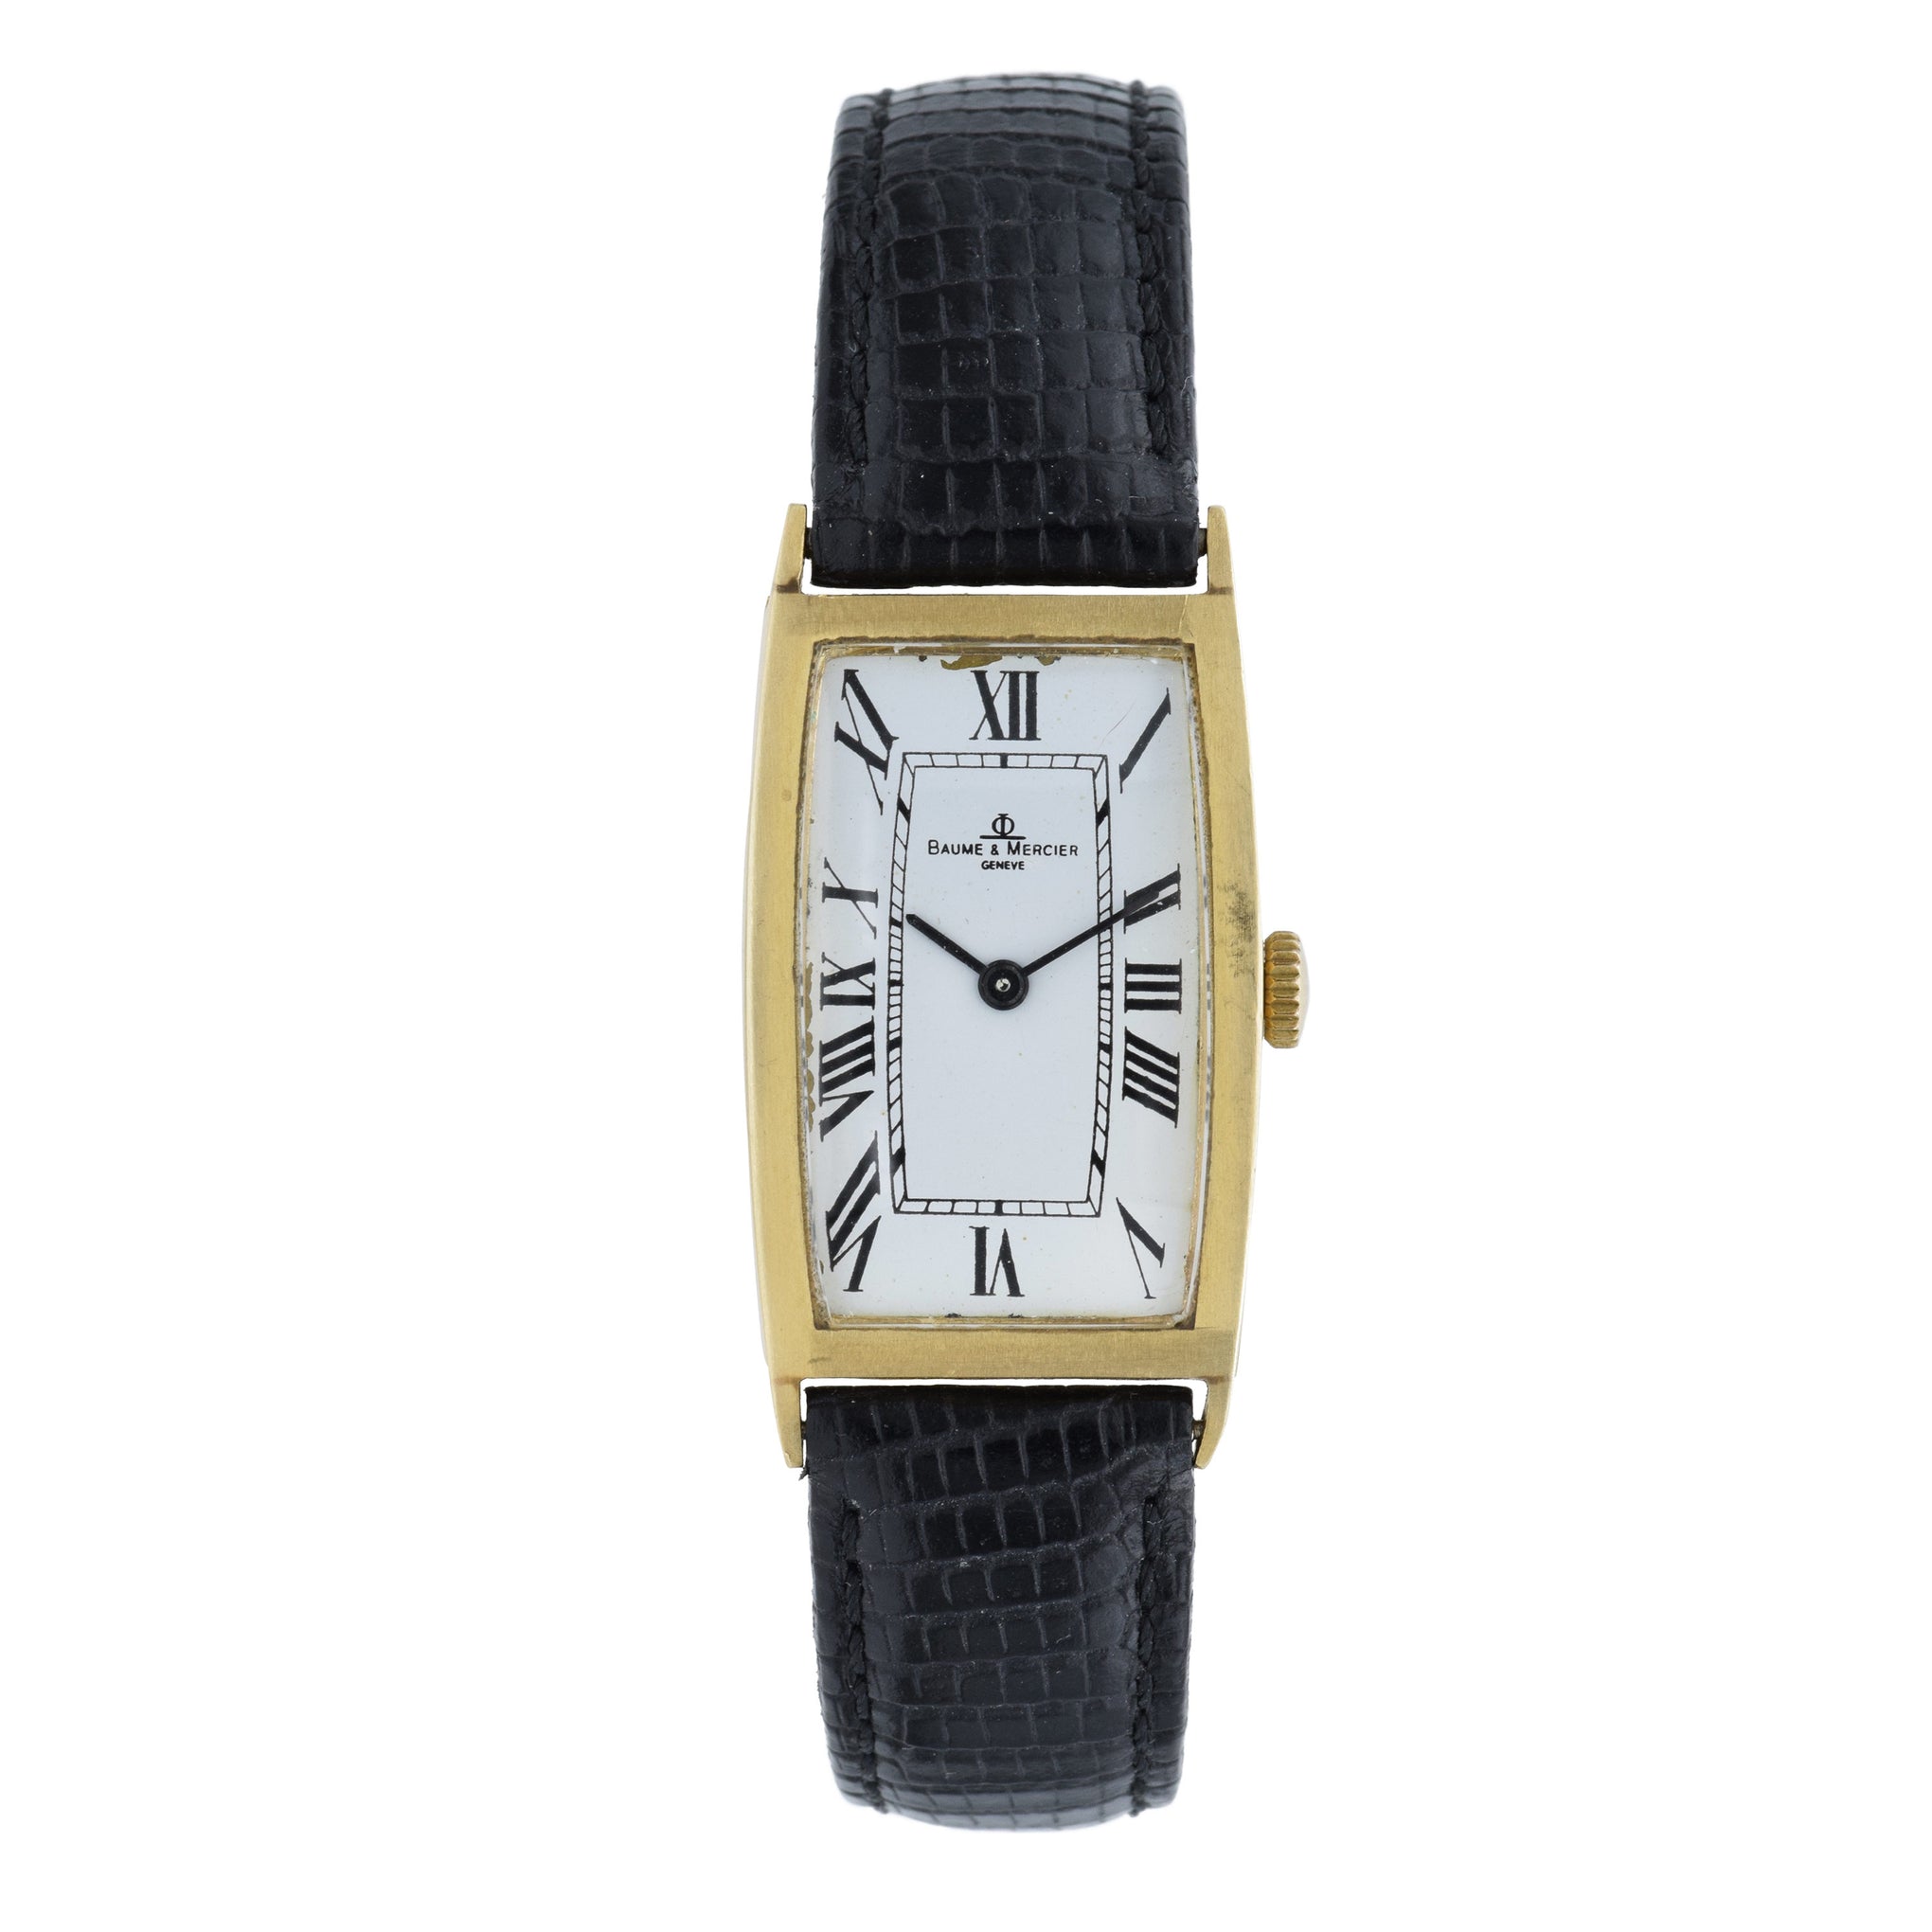 Vintage 1970s Baume & Mercier Watch